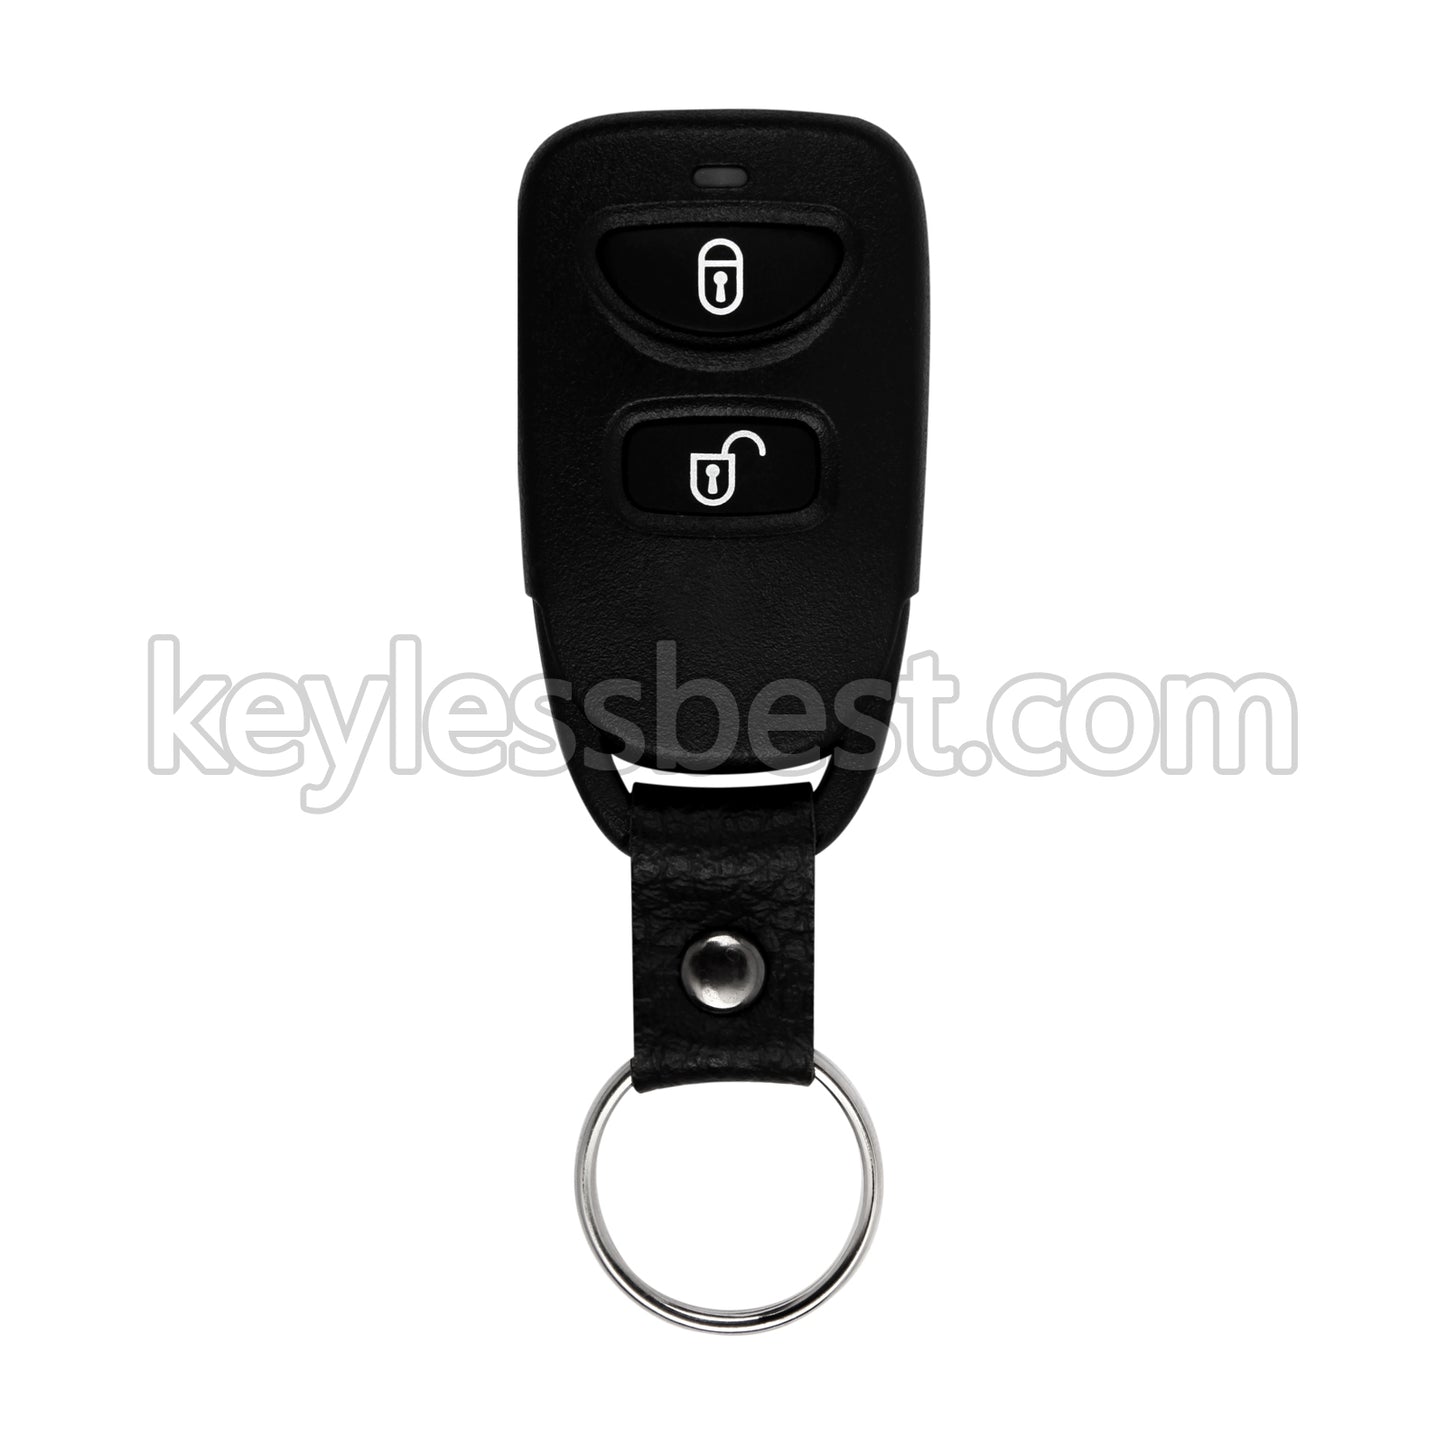 2005 - 2009 Hyundai Tucson / 3 Buttons Remote Key / OSLOKA-320T OSLOKA-110T / 315MHz